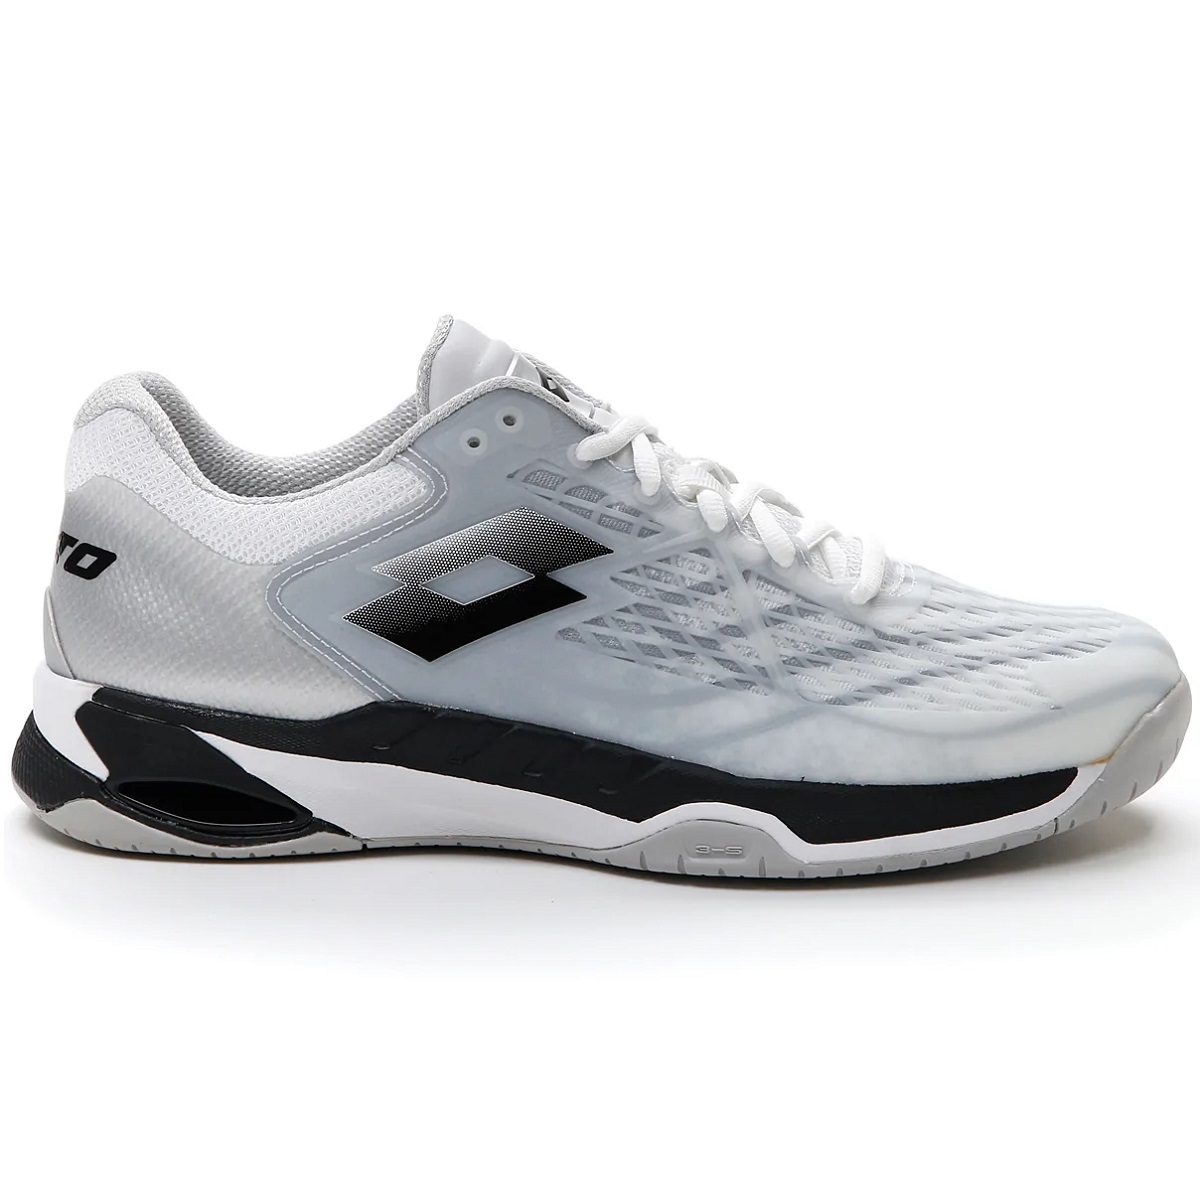 Lotto Men’s Mirage 100 Speed Tennis Shoes (White/Black/Metal Silver)